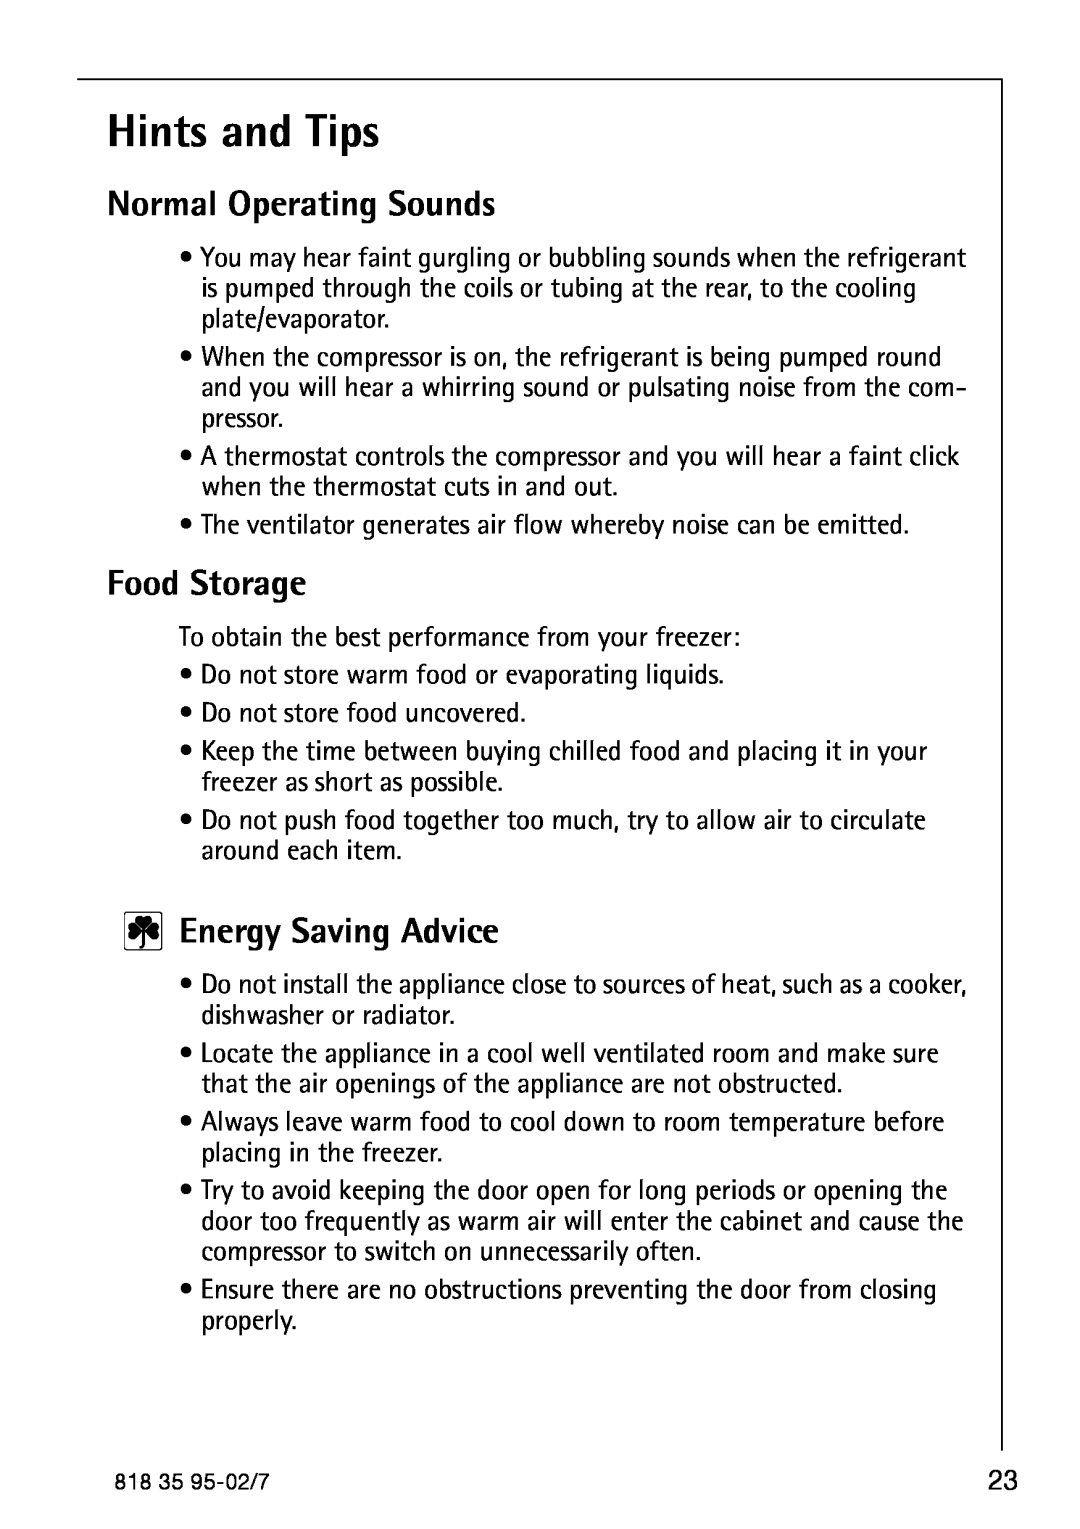 AEG 75248 GA3 manual Hints and Tips, Normal Operating Sounds, Food Storage, Energy Saving Advice 